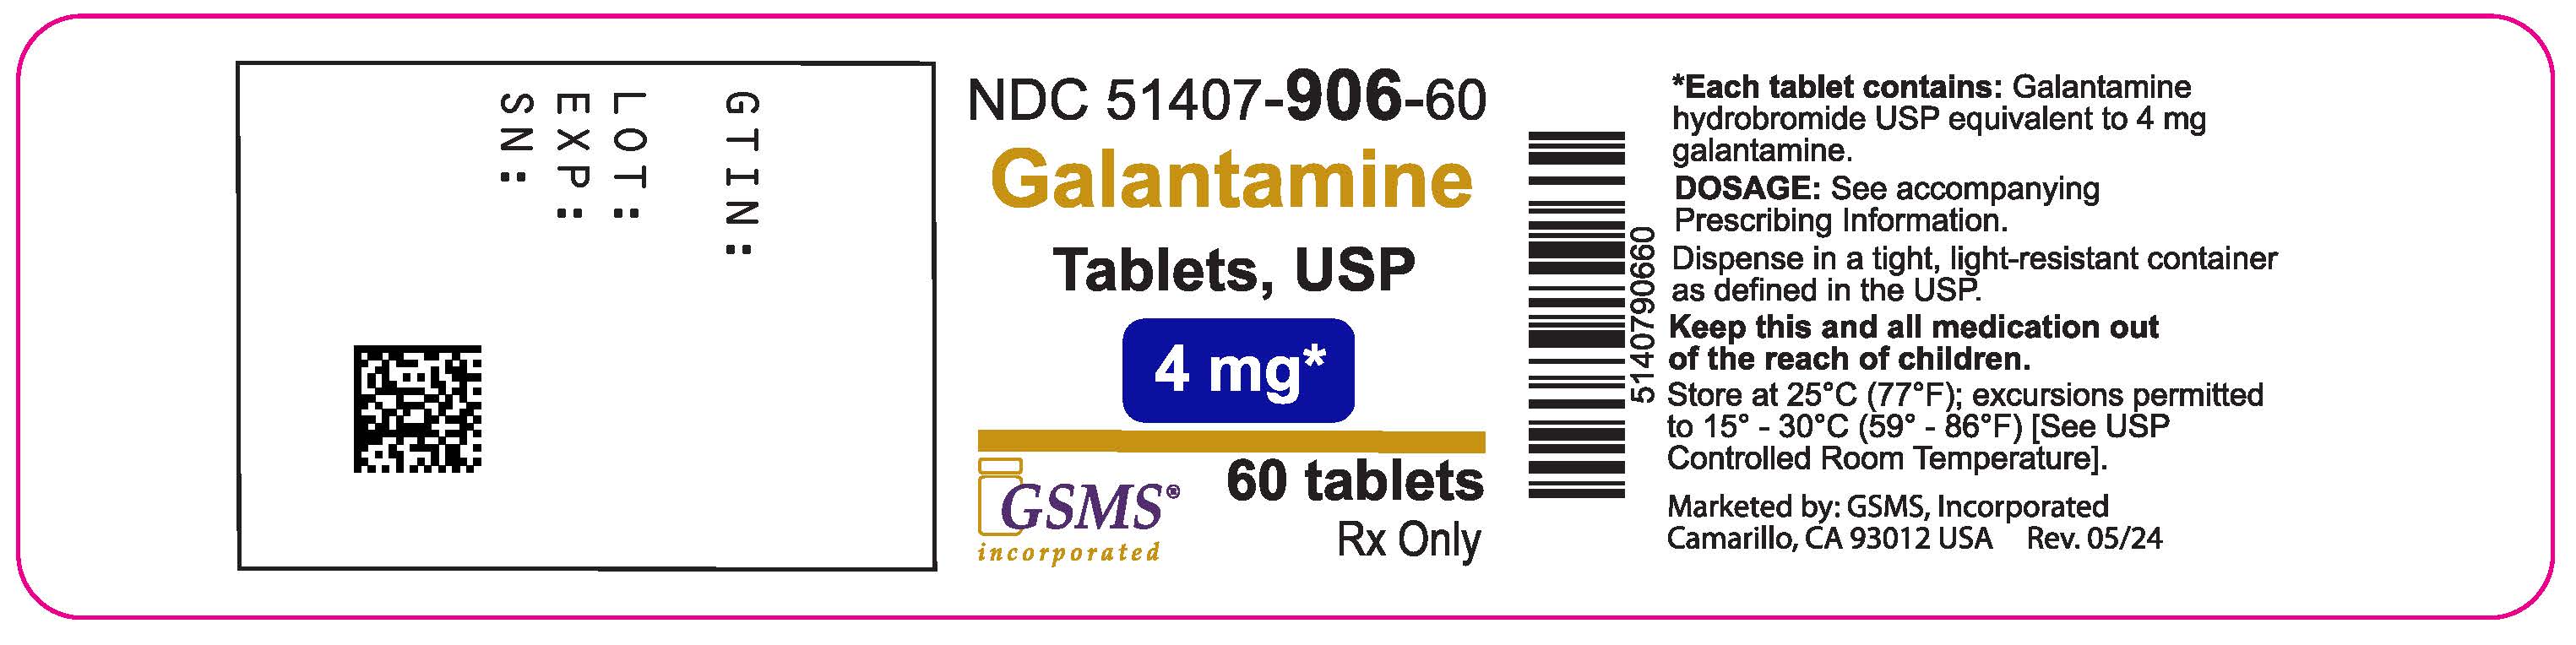 51407-906-60OL - Galantamine 4 mg - Rev. 0524.jpg